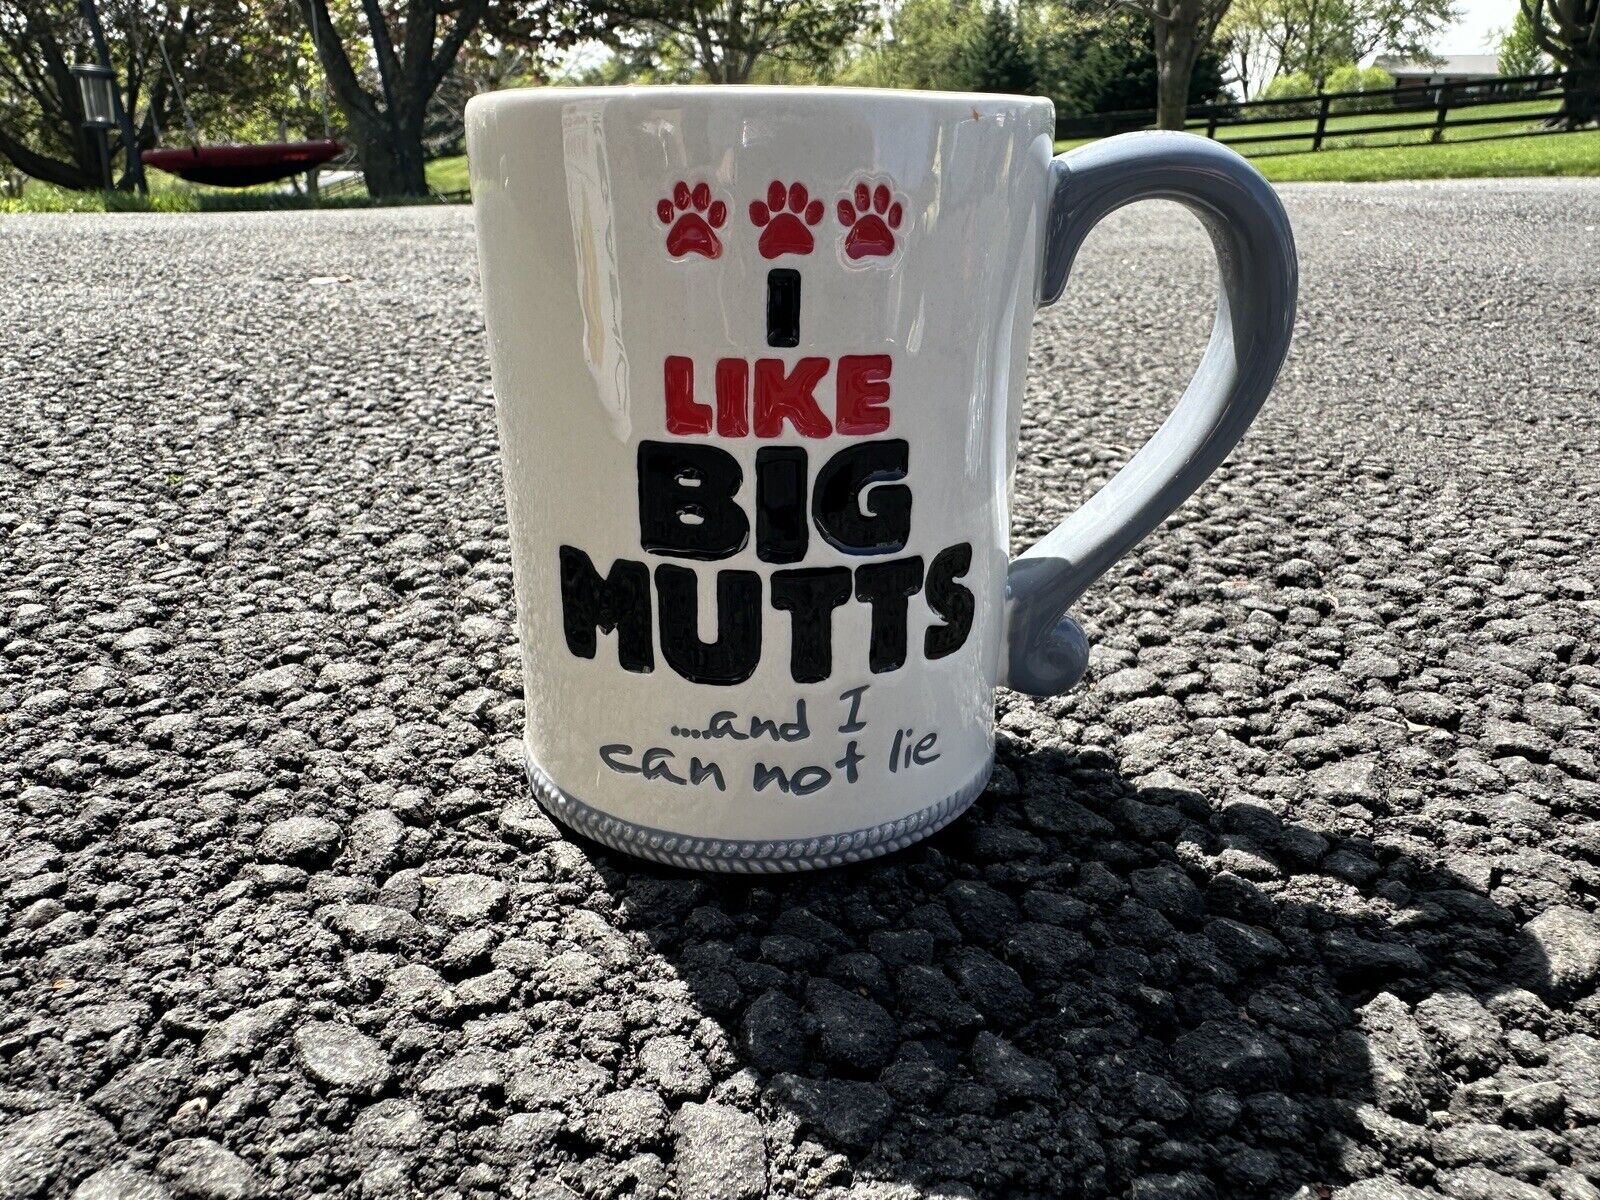 Cute Decorative Mug  -  I Like Big Mutts and I Cannot Lie - By Grasslands Road